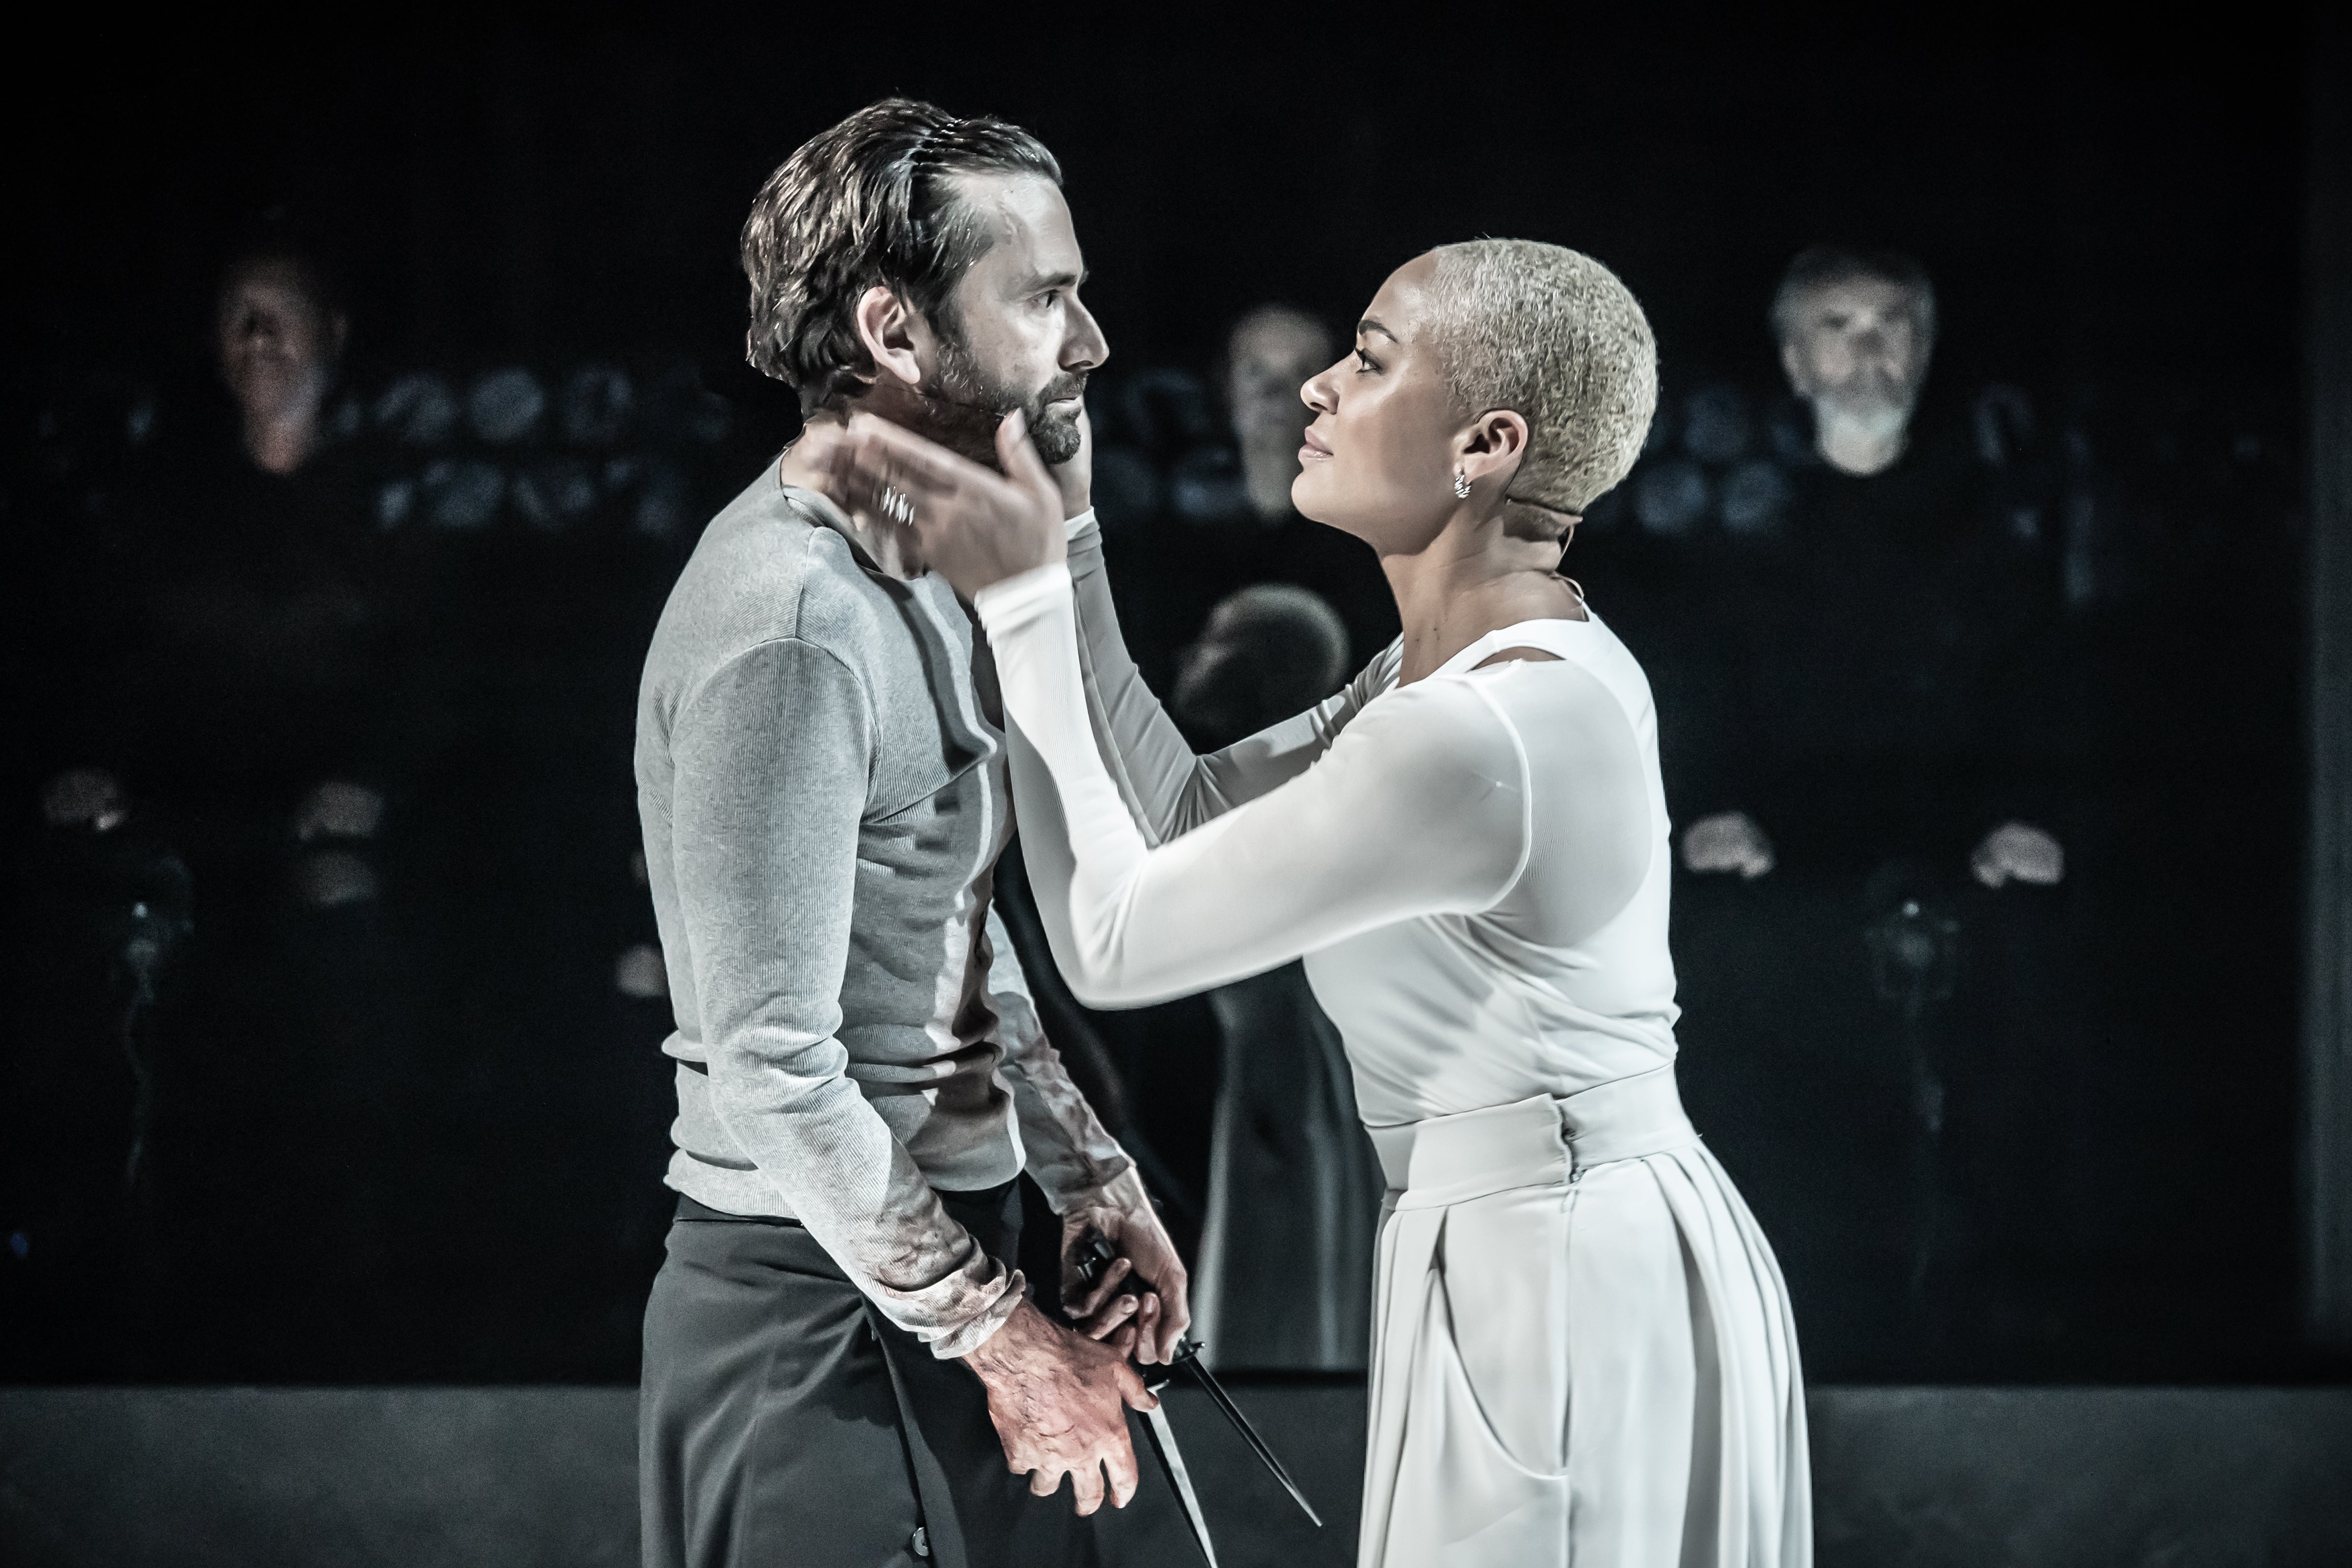 Jumbo is mesmerising as Lady Macbeth, while Tennant makes a compelling Macbeth